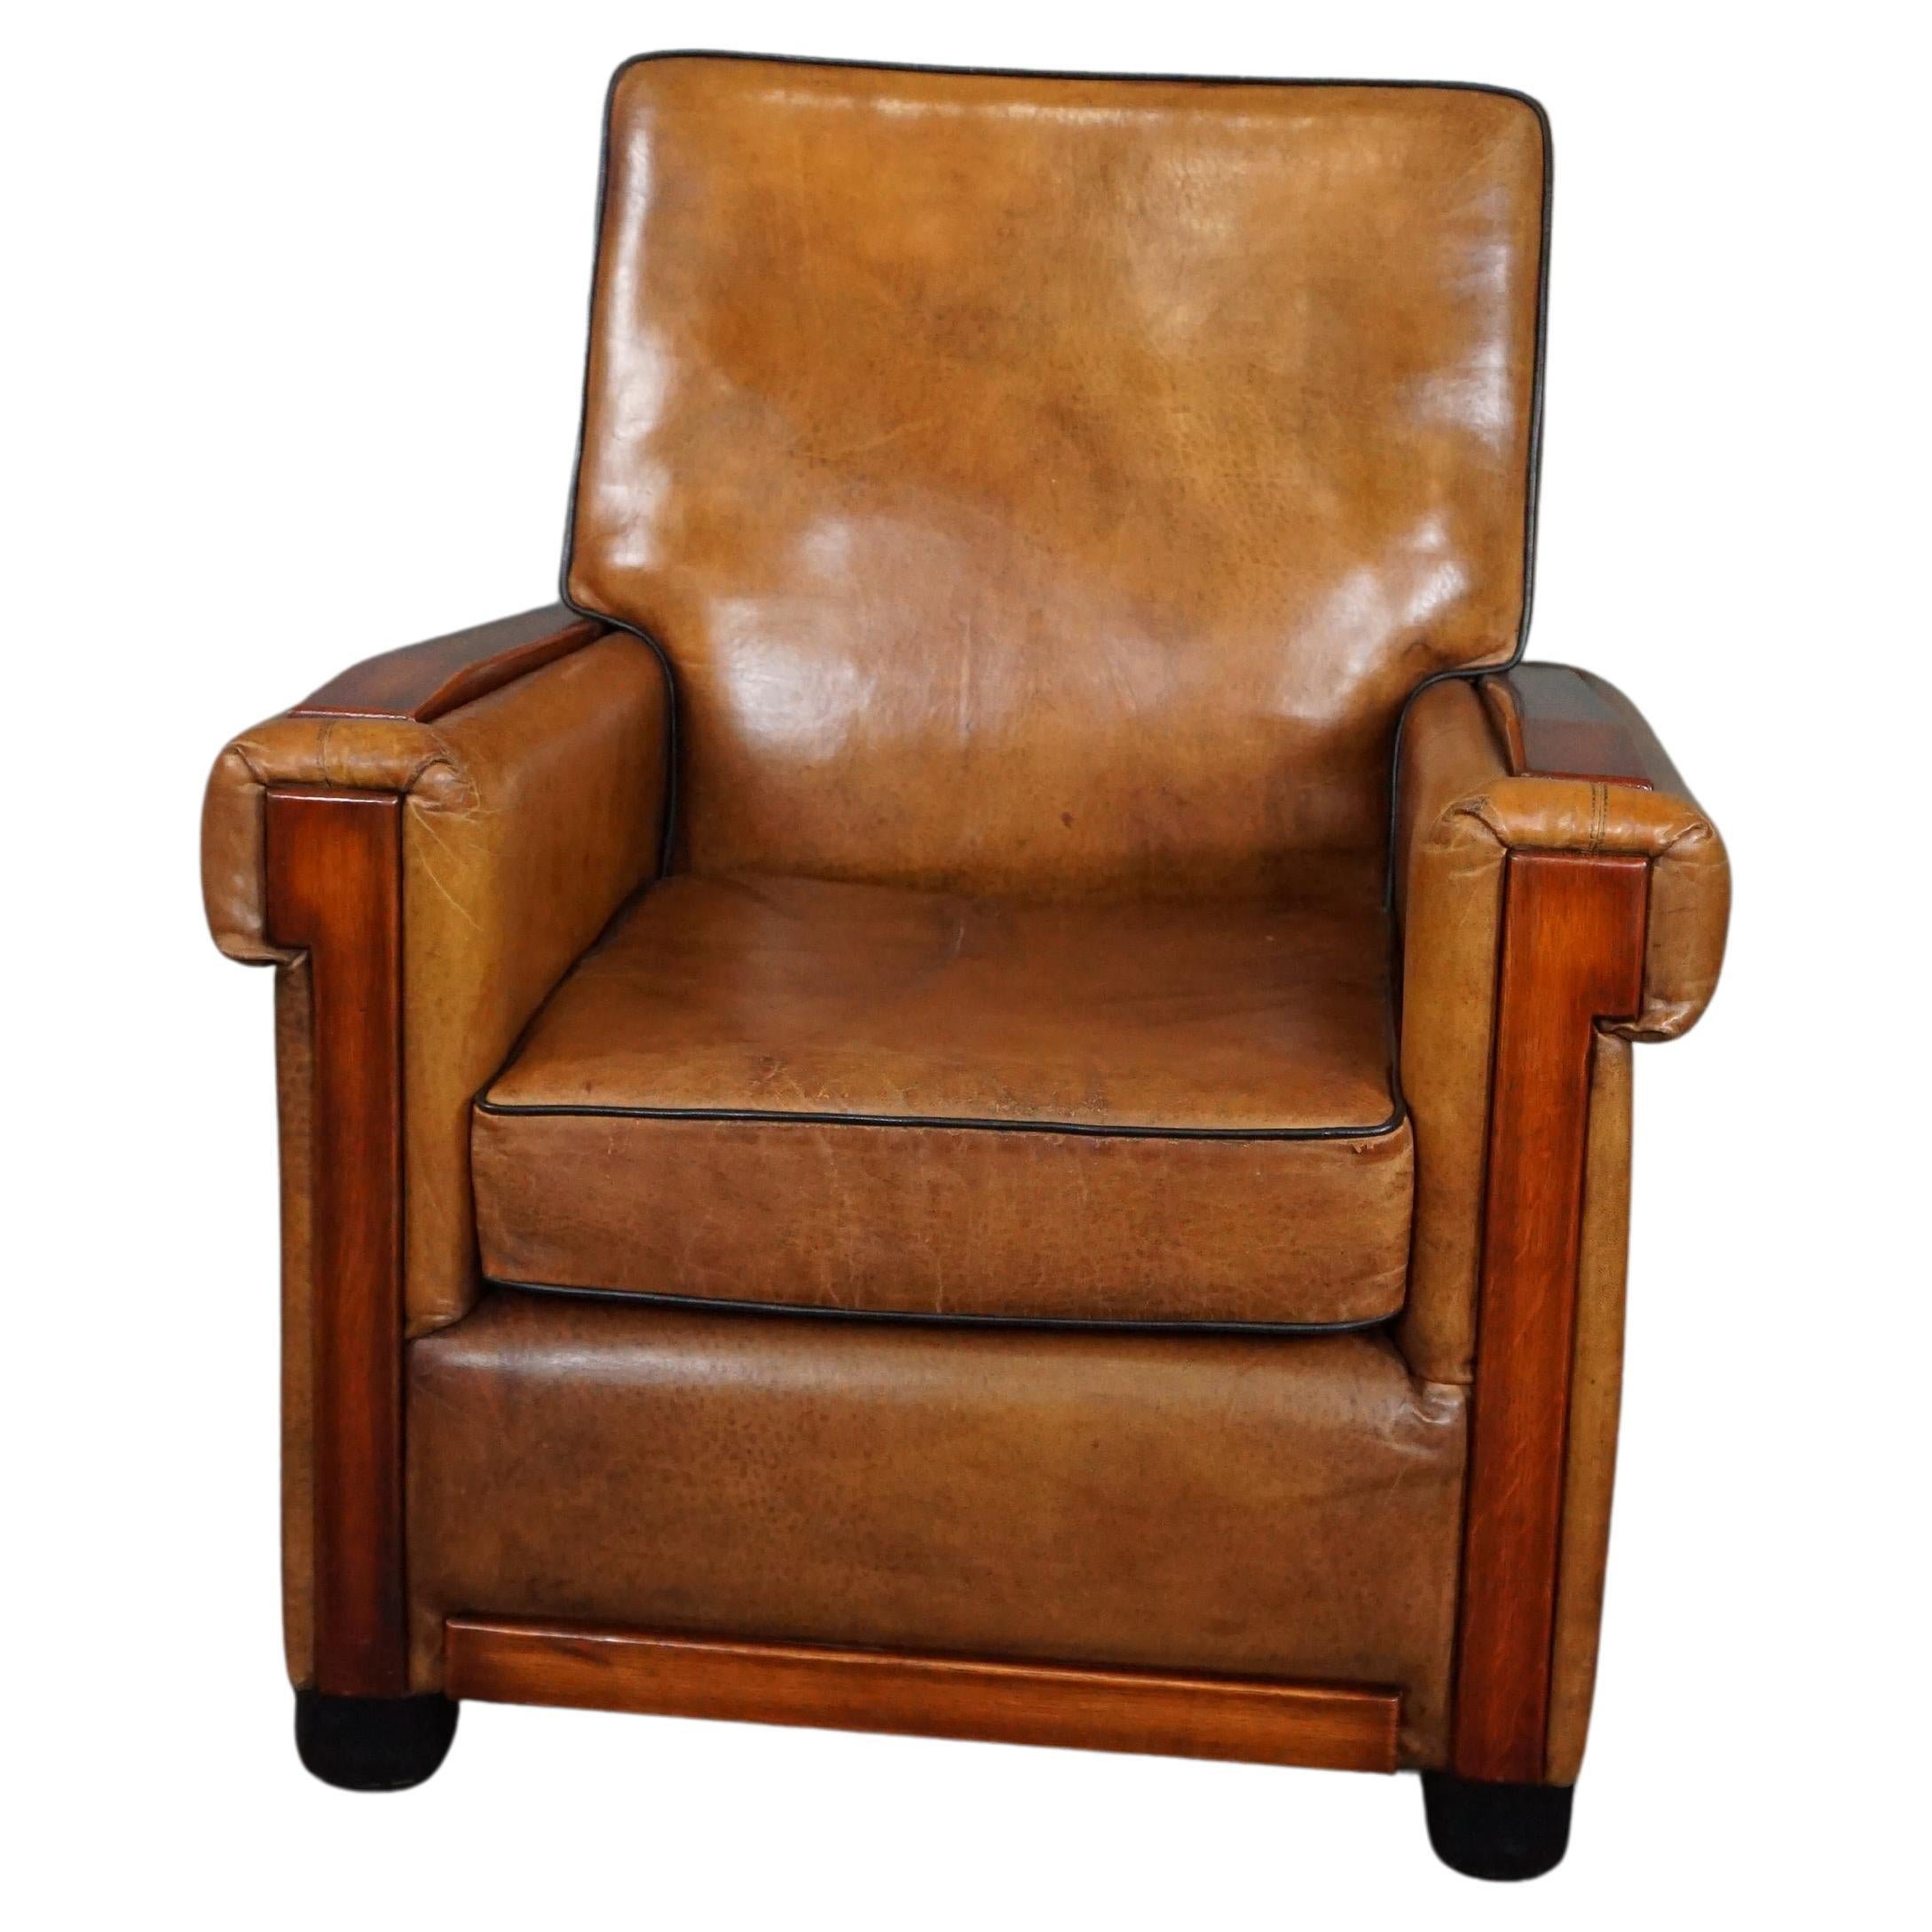 Sleekly designed sheepskin Art Deco design armchair